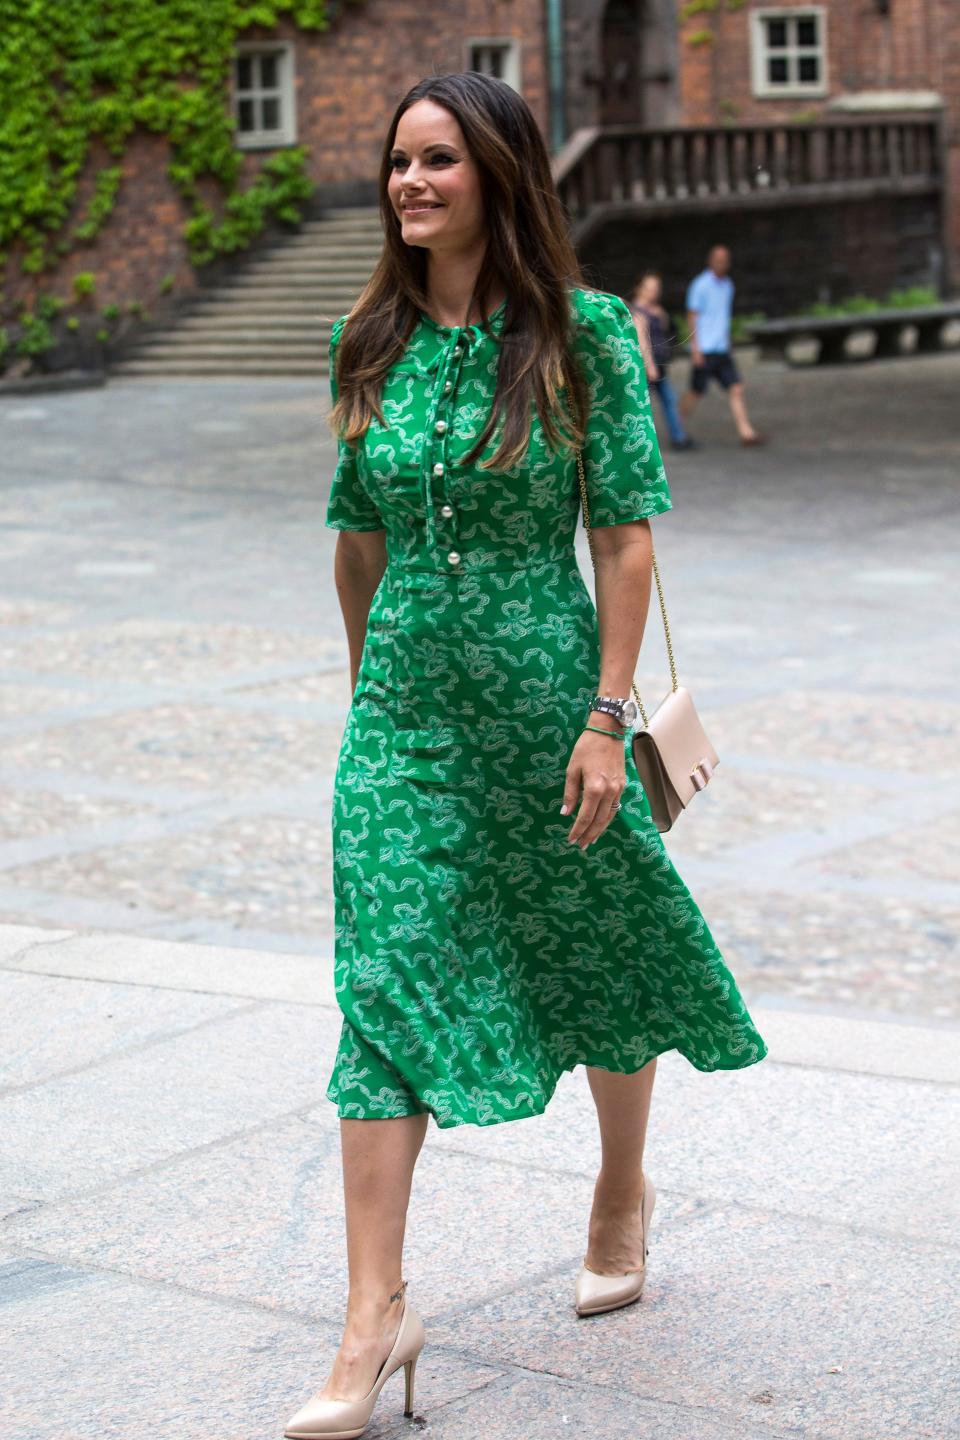 Princess Sofia of Sweden wearing a green dress